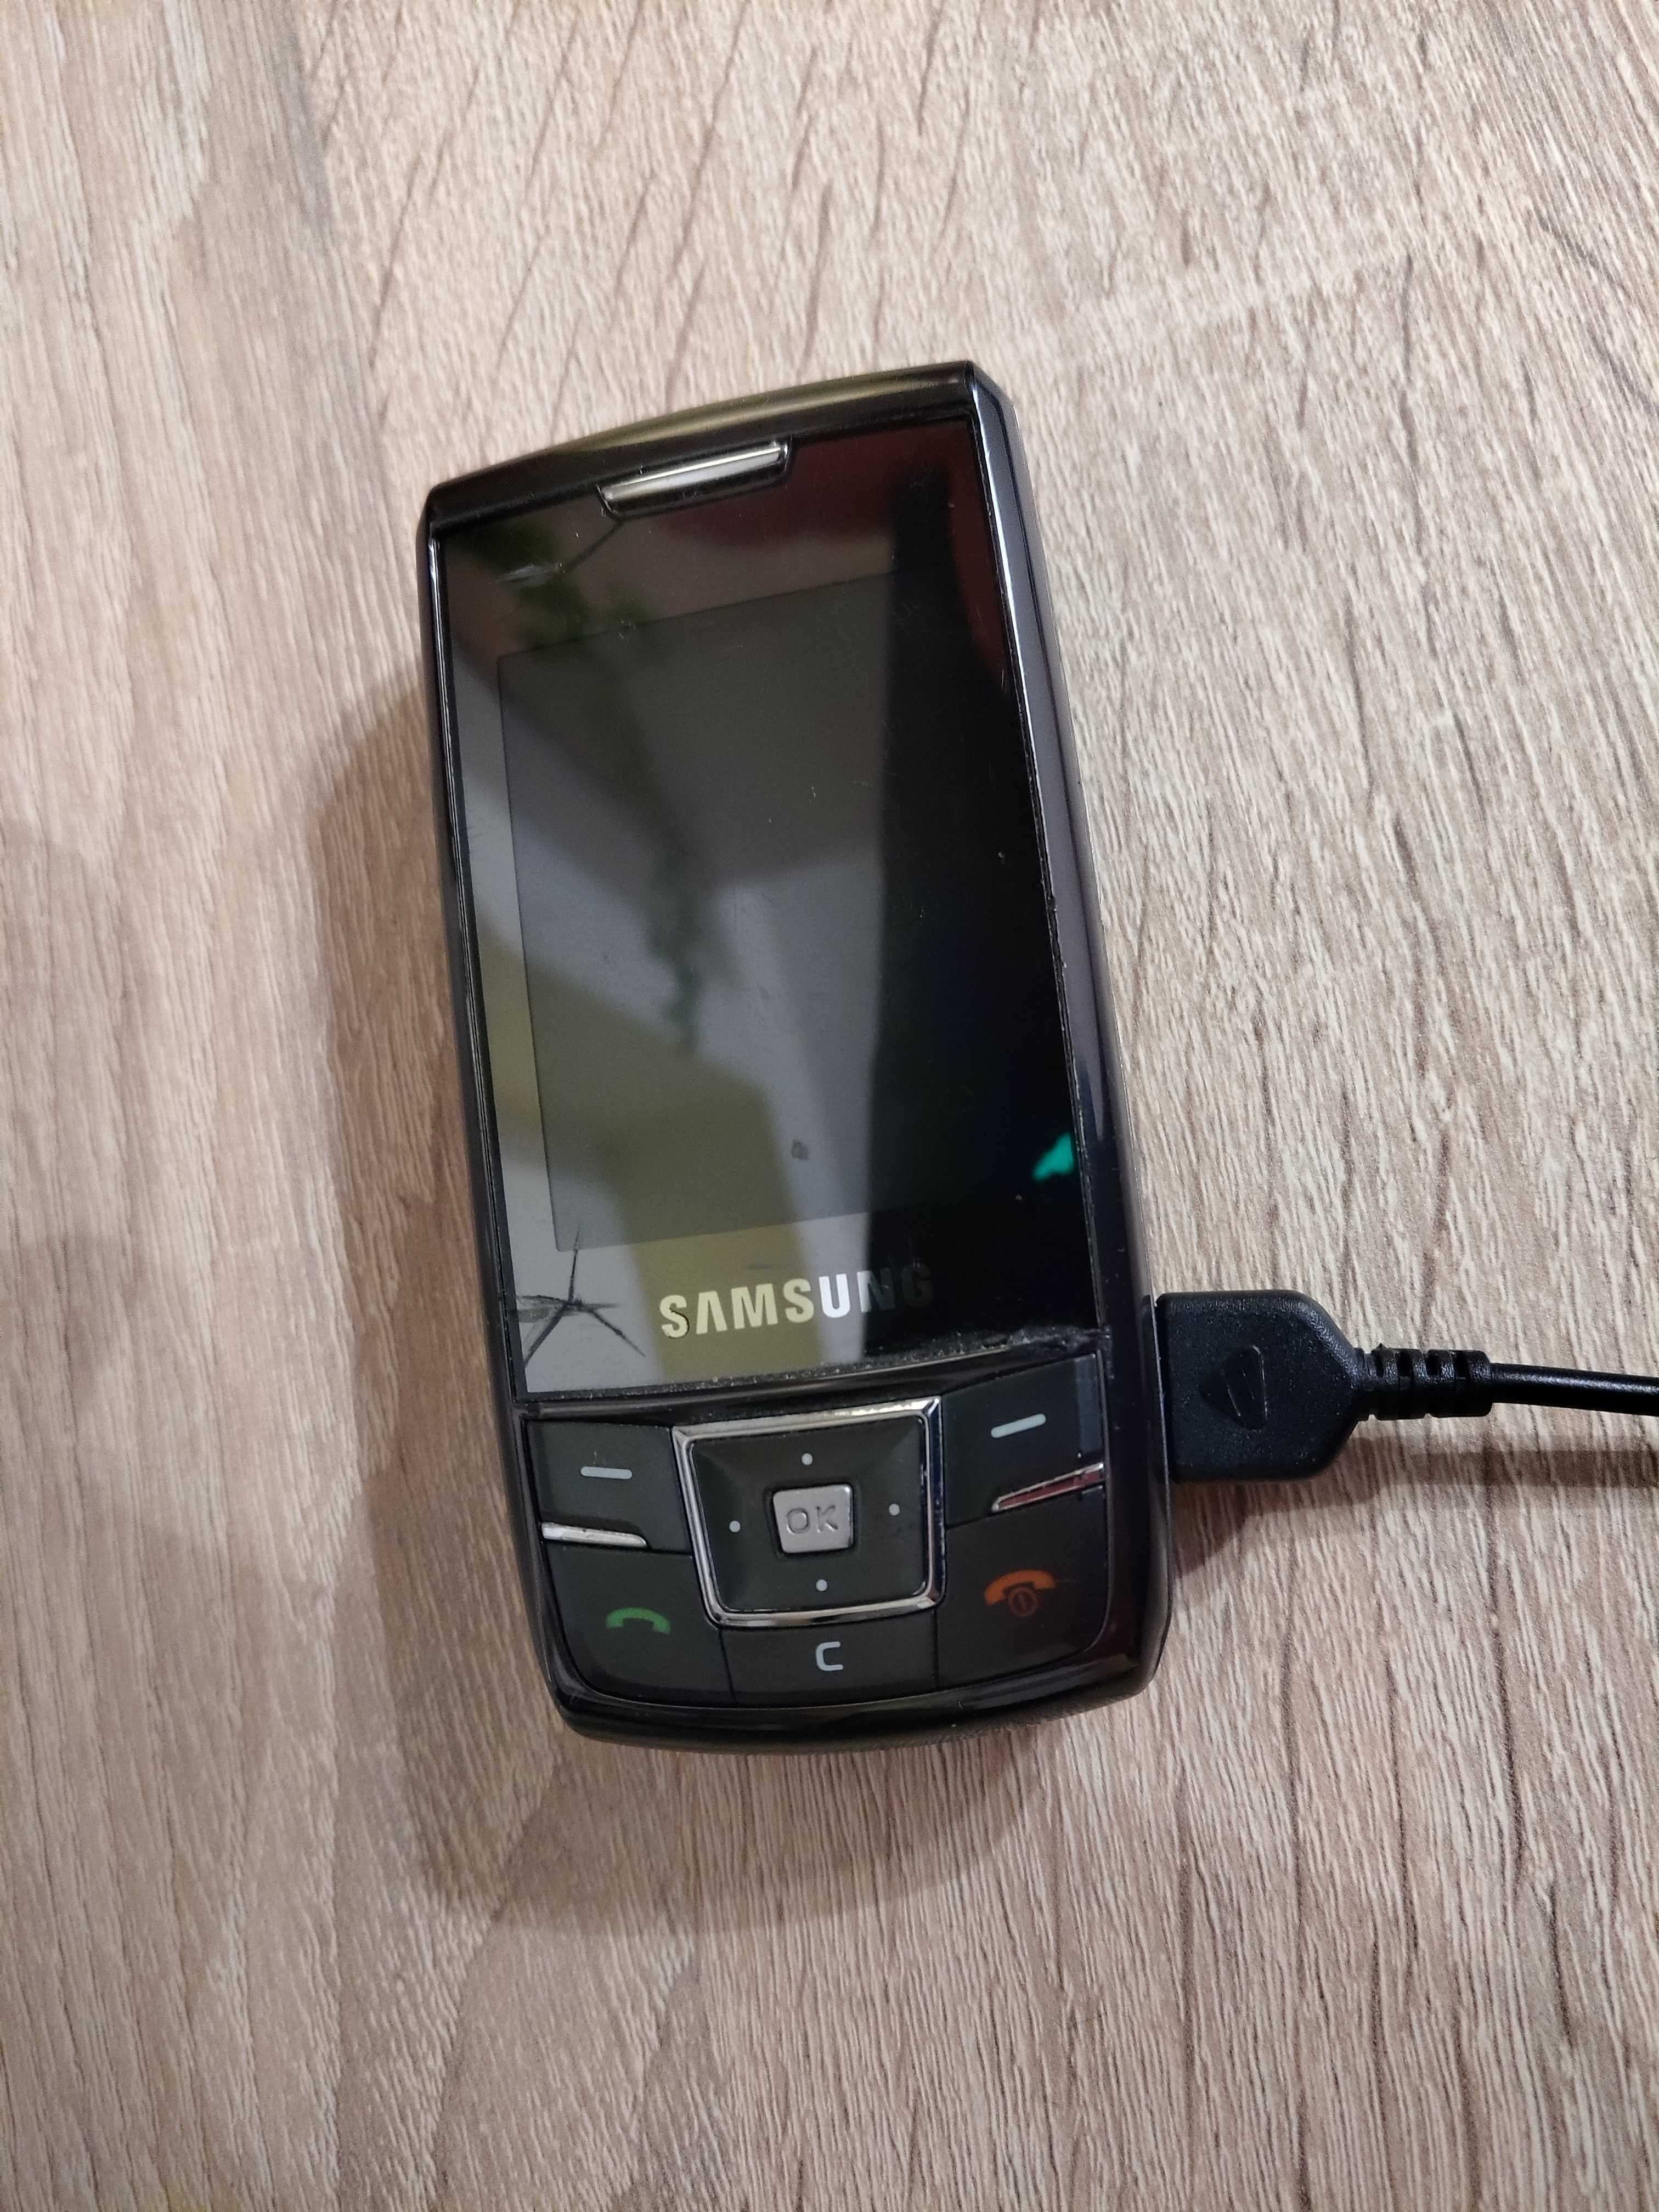 Samsung SGH-D880 30лв